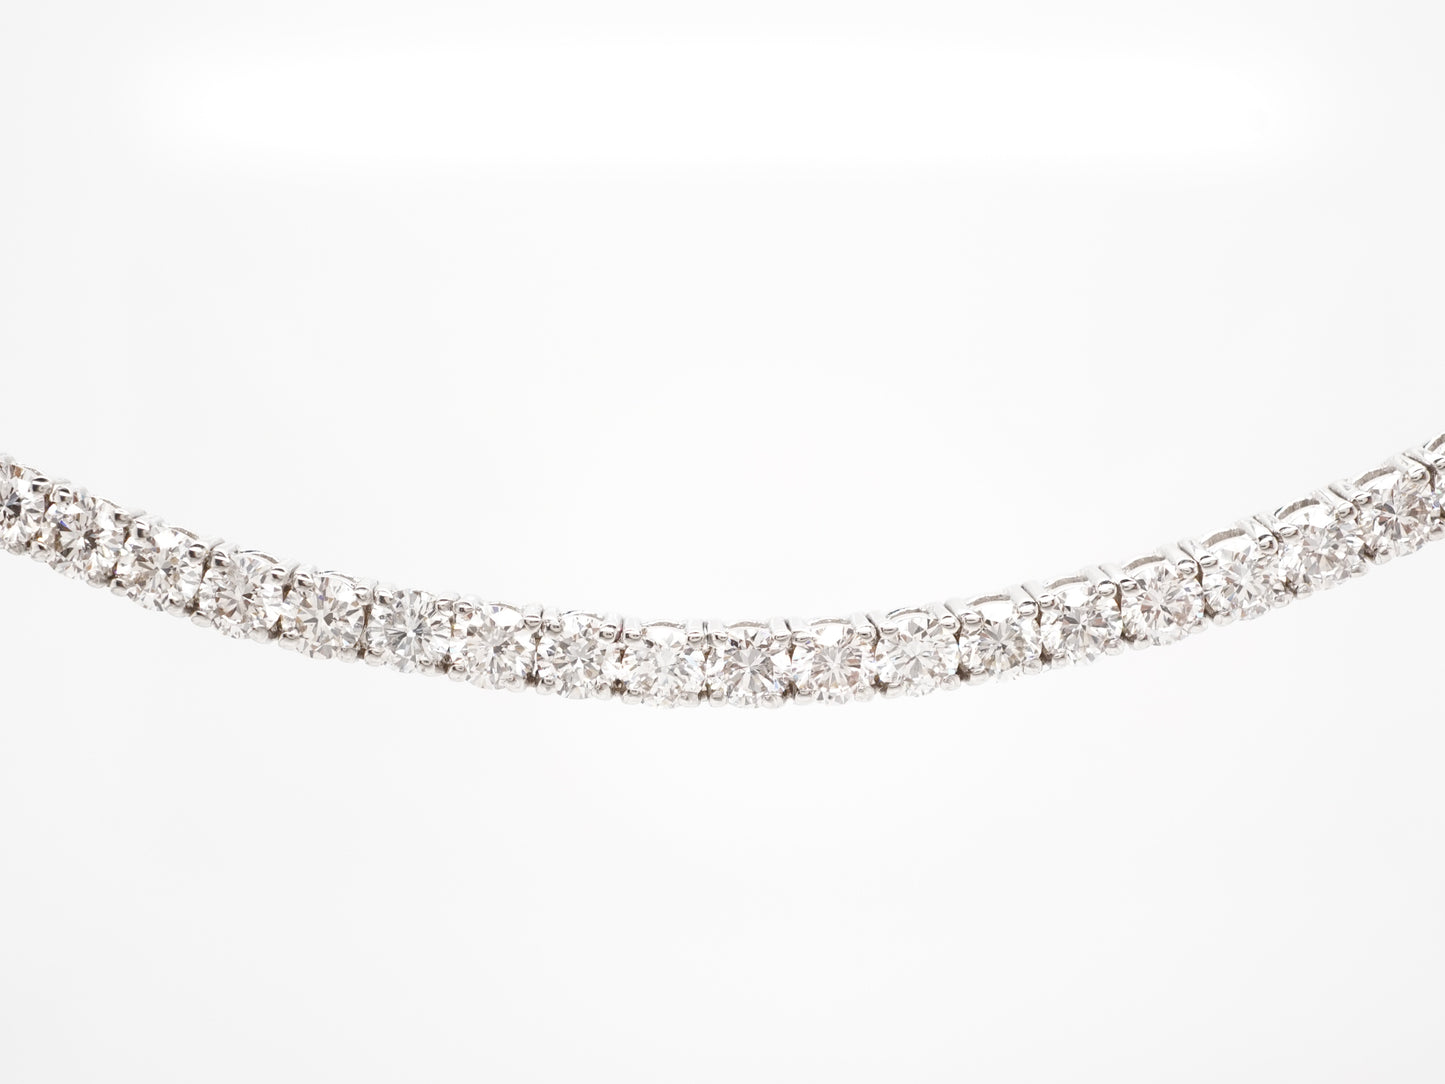 10.14 Carat Diamond Tennis Necklace in 14K White Gold